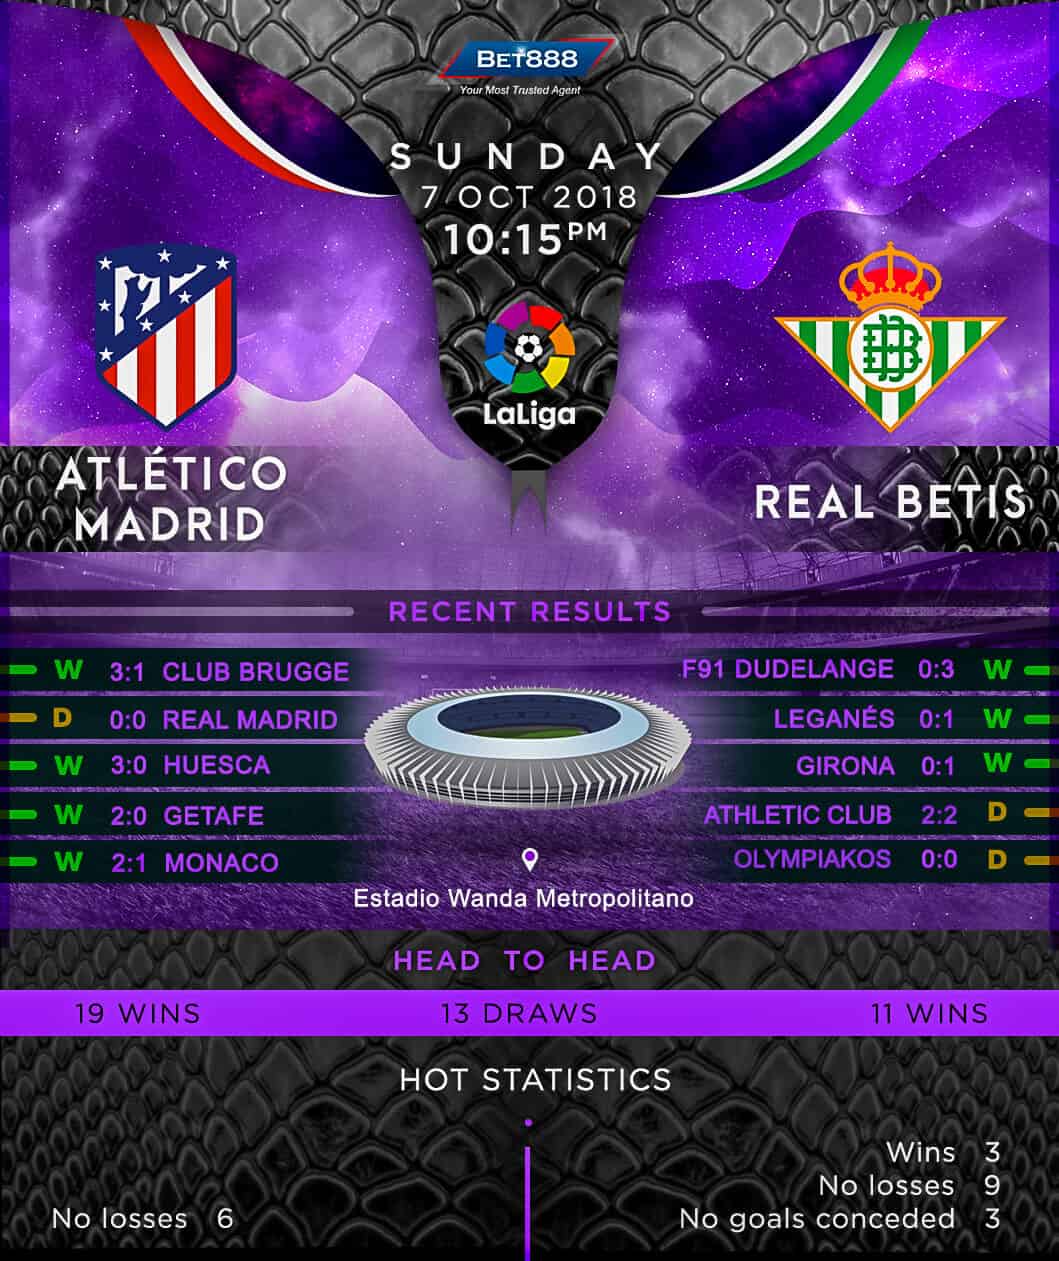 Atletico Madrid vs Real Betis 07/10/18